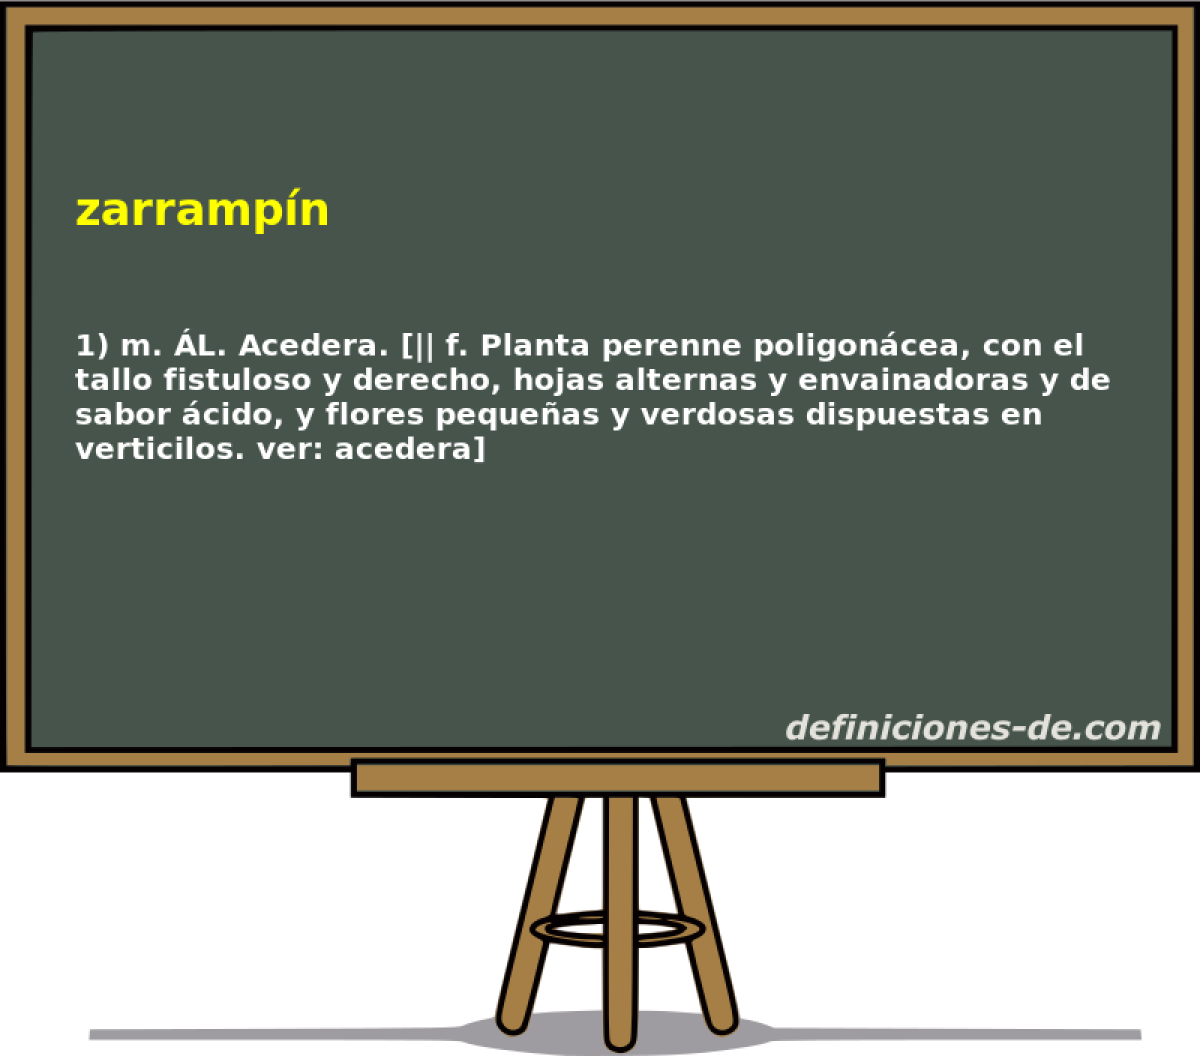 zarrampn 